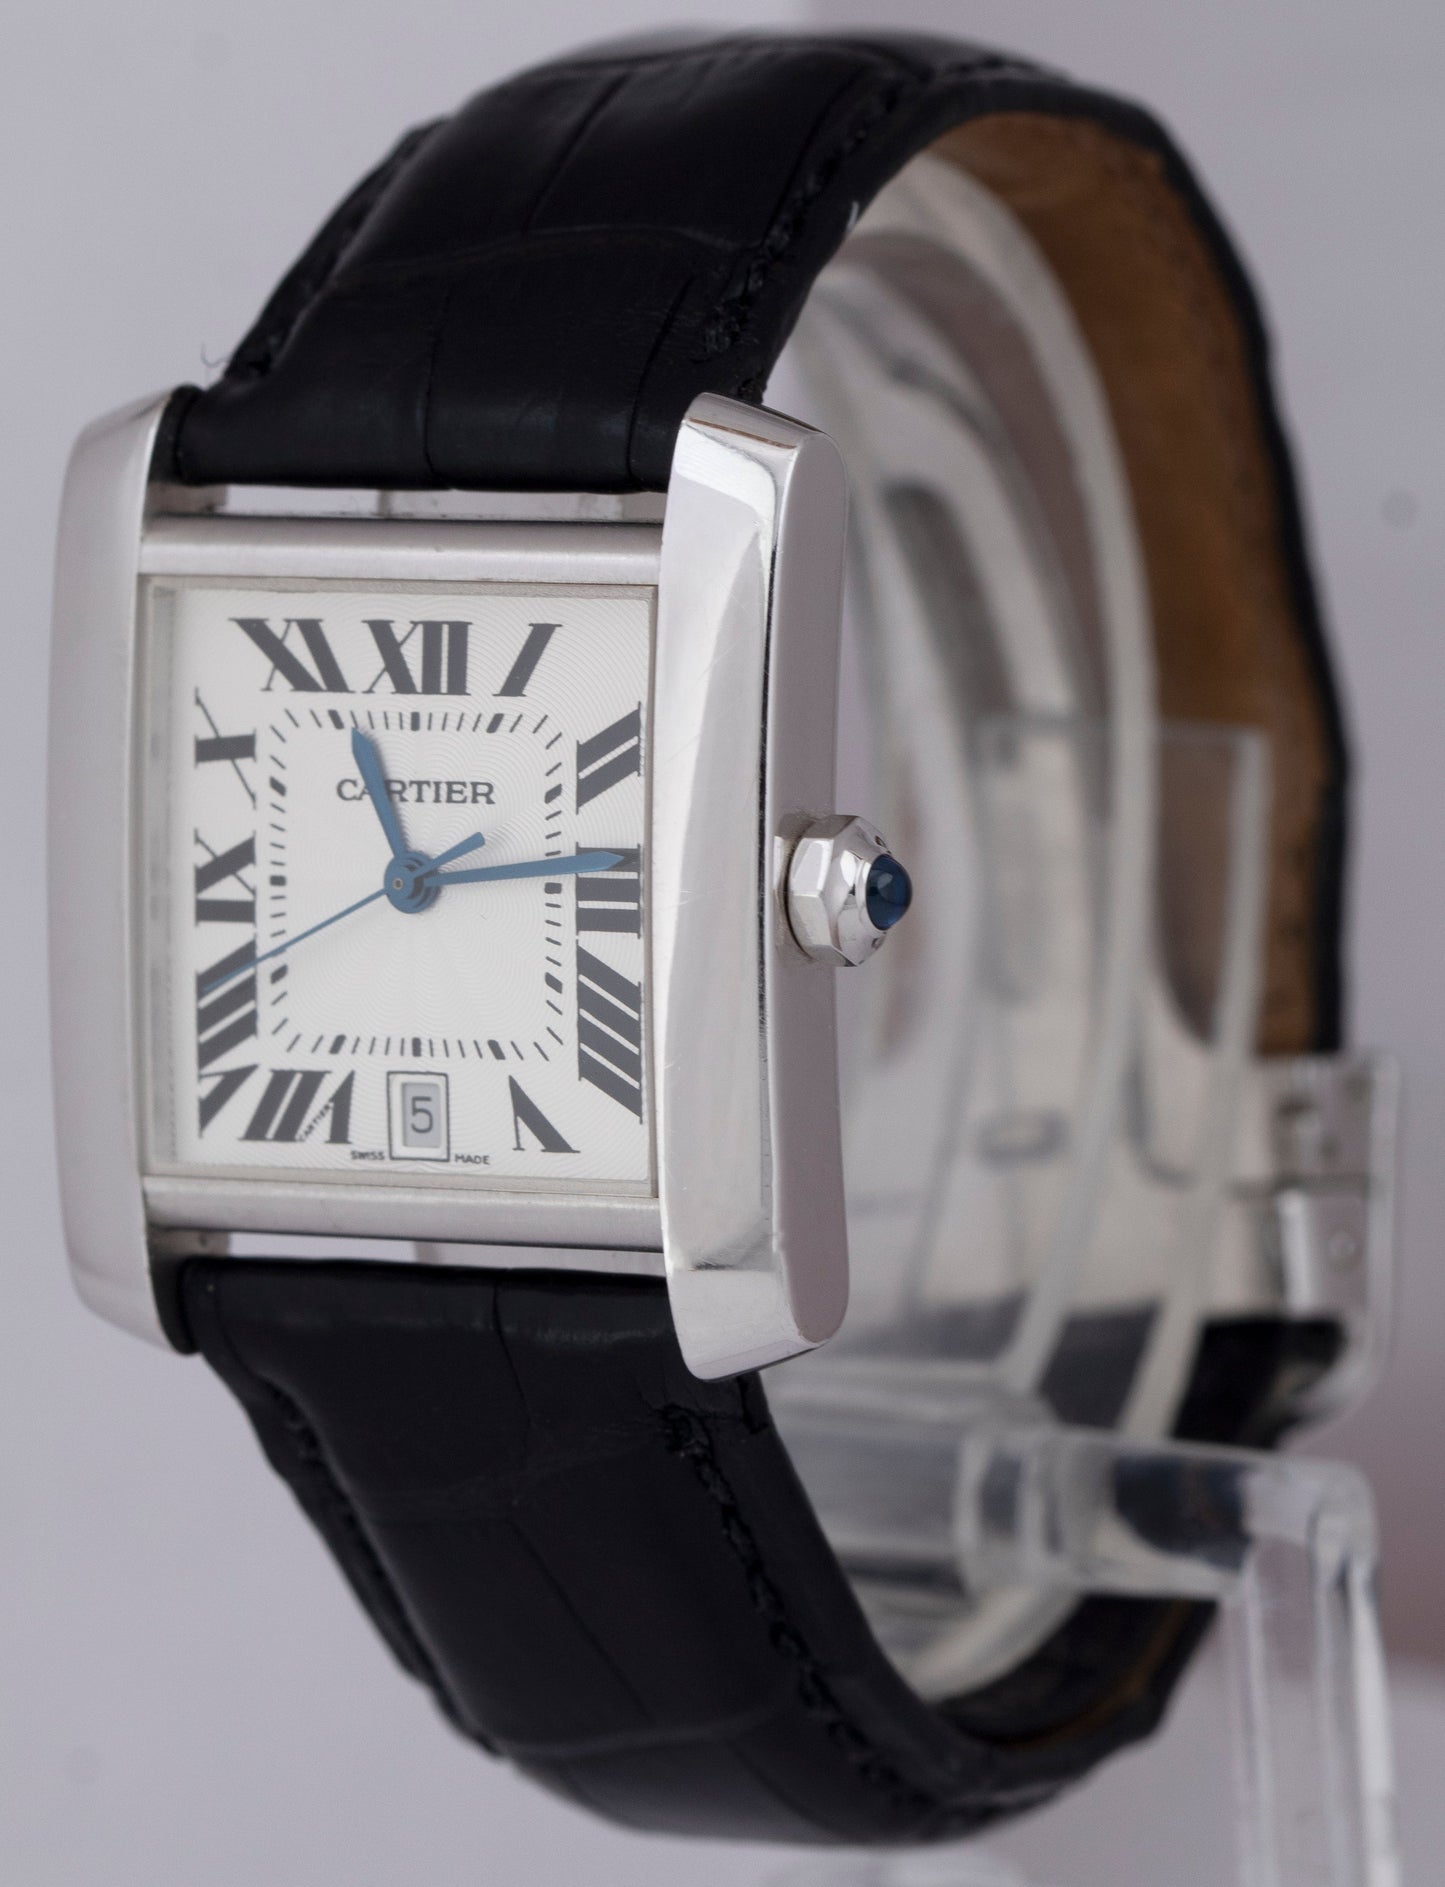 Ladies Cartier Tank Française 18K White Gold 28mm Automatic Date Watch 2366